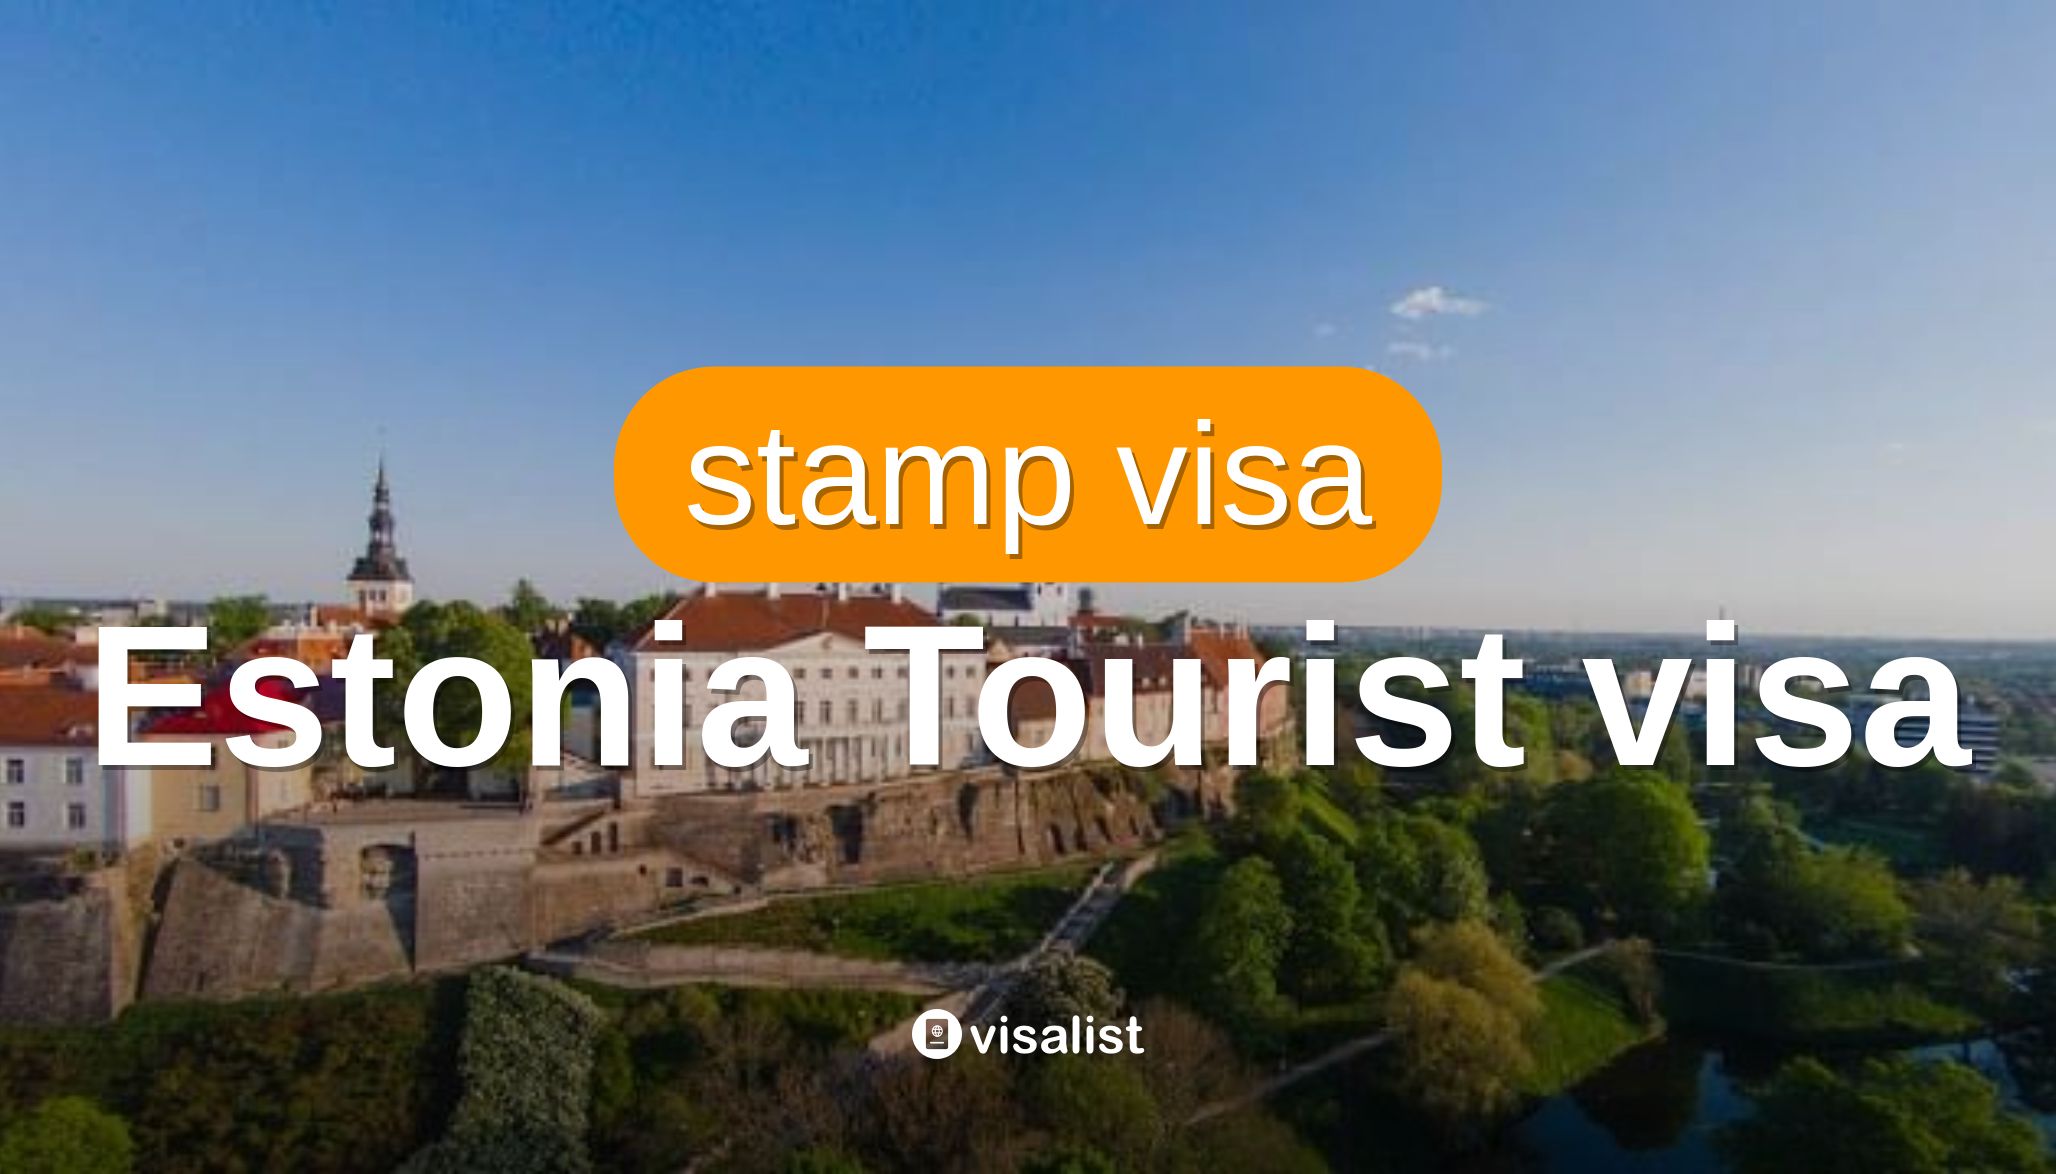 estonia tourist visa requirements for indian